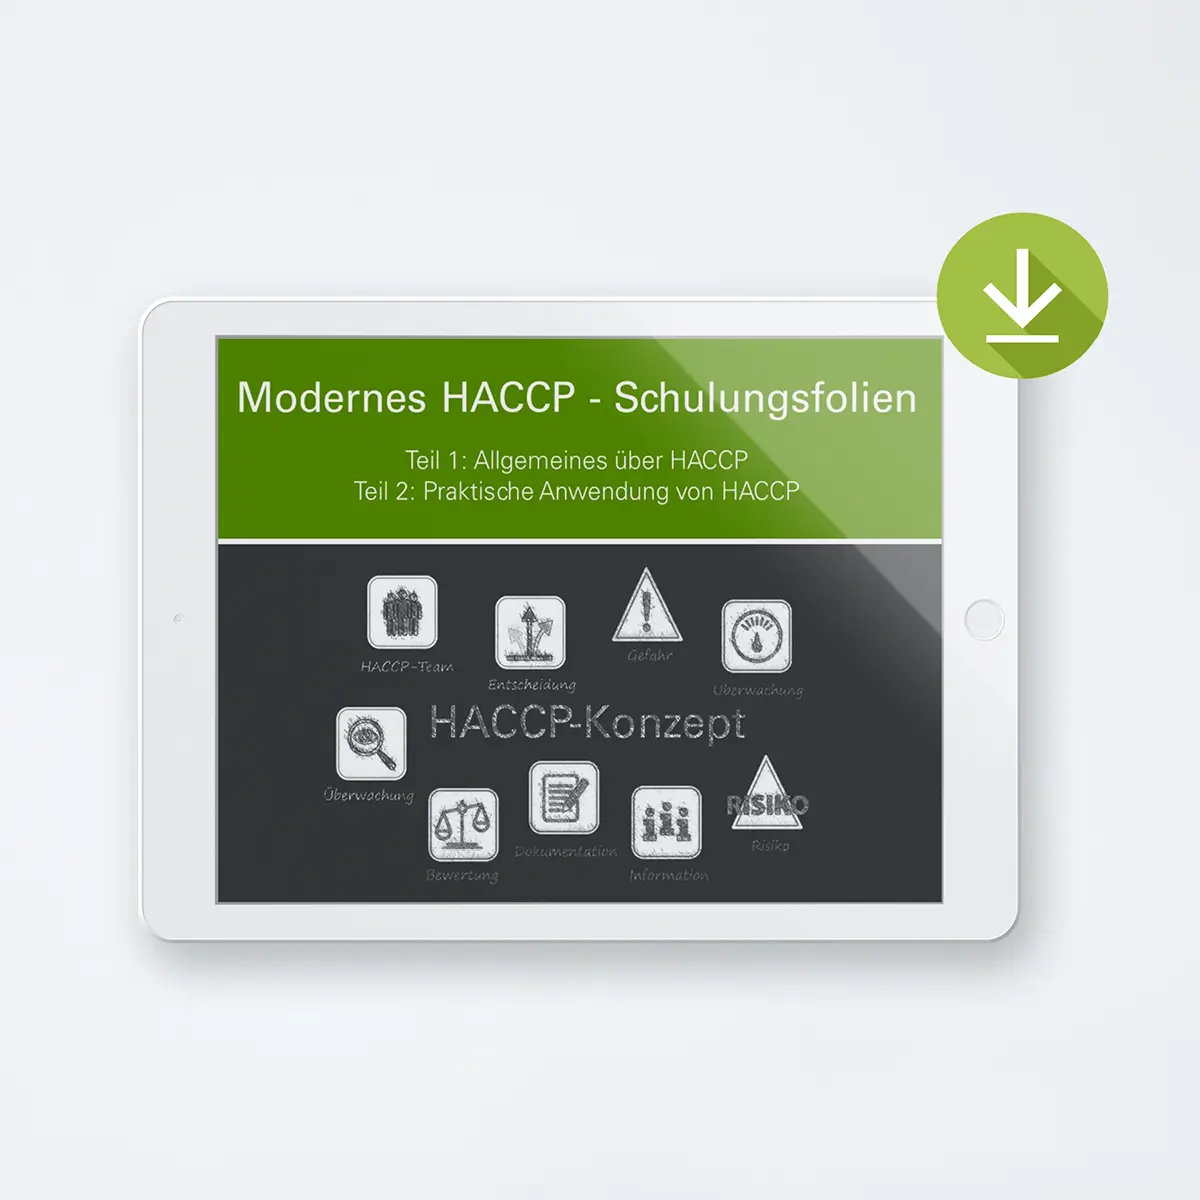 Schulungsfolien zu Modernes HACCP – Zum Download